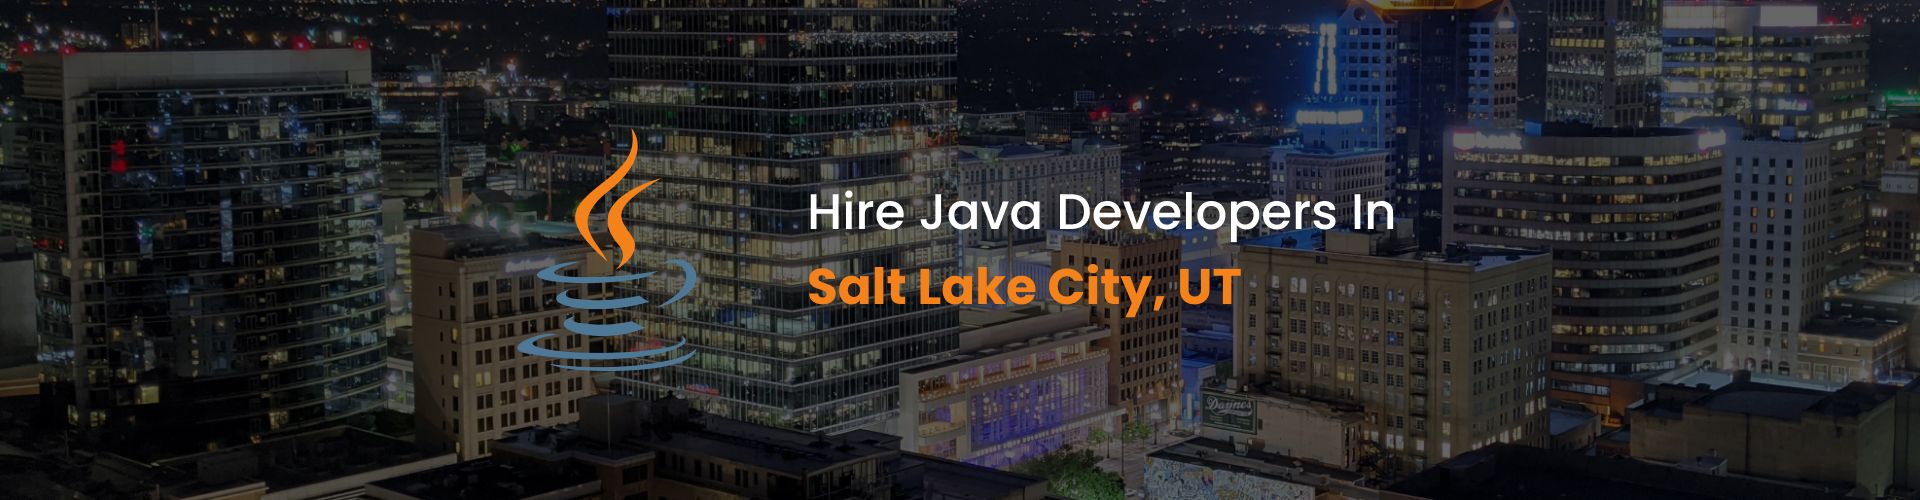 hire java developers in salt lake city